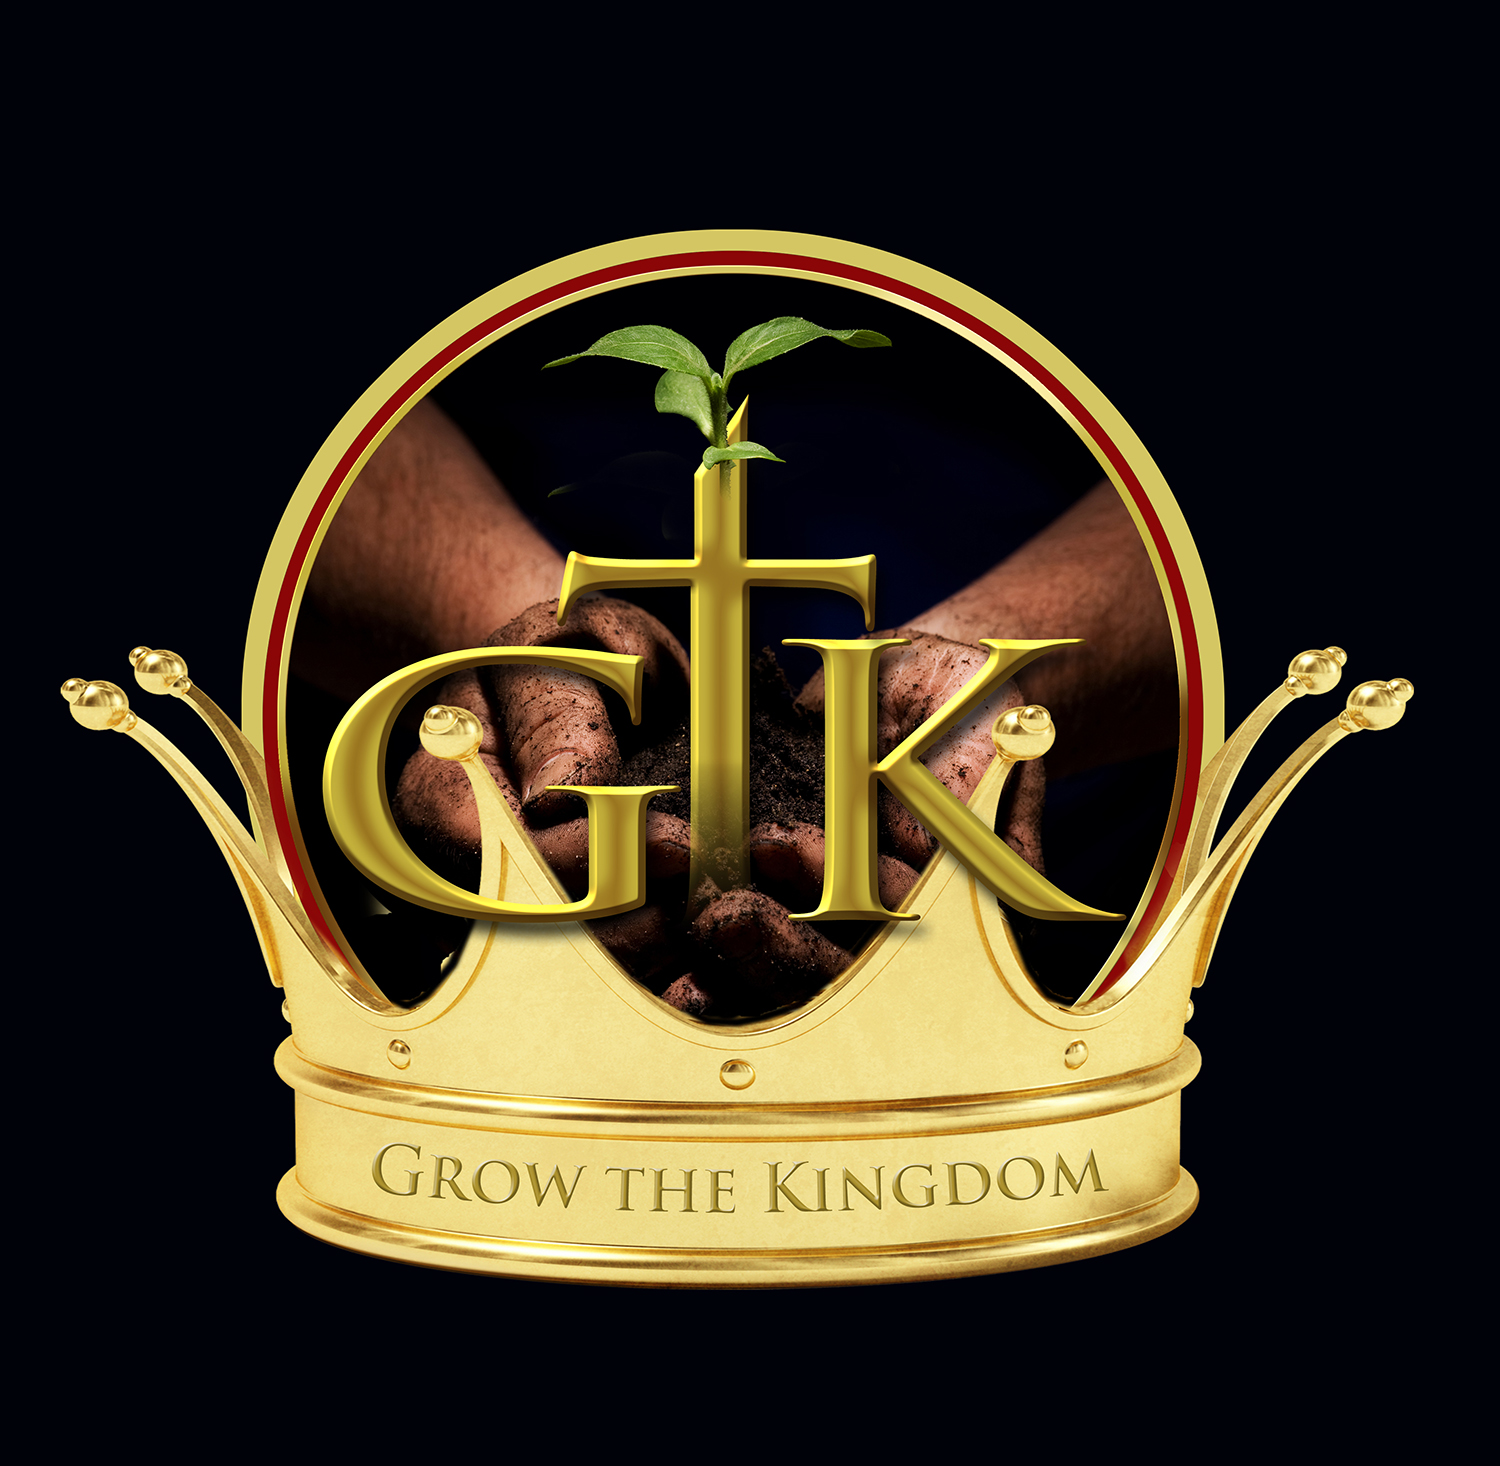 Grow the Kingdom